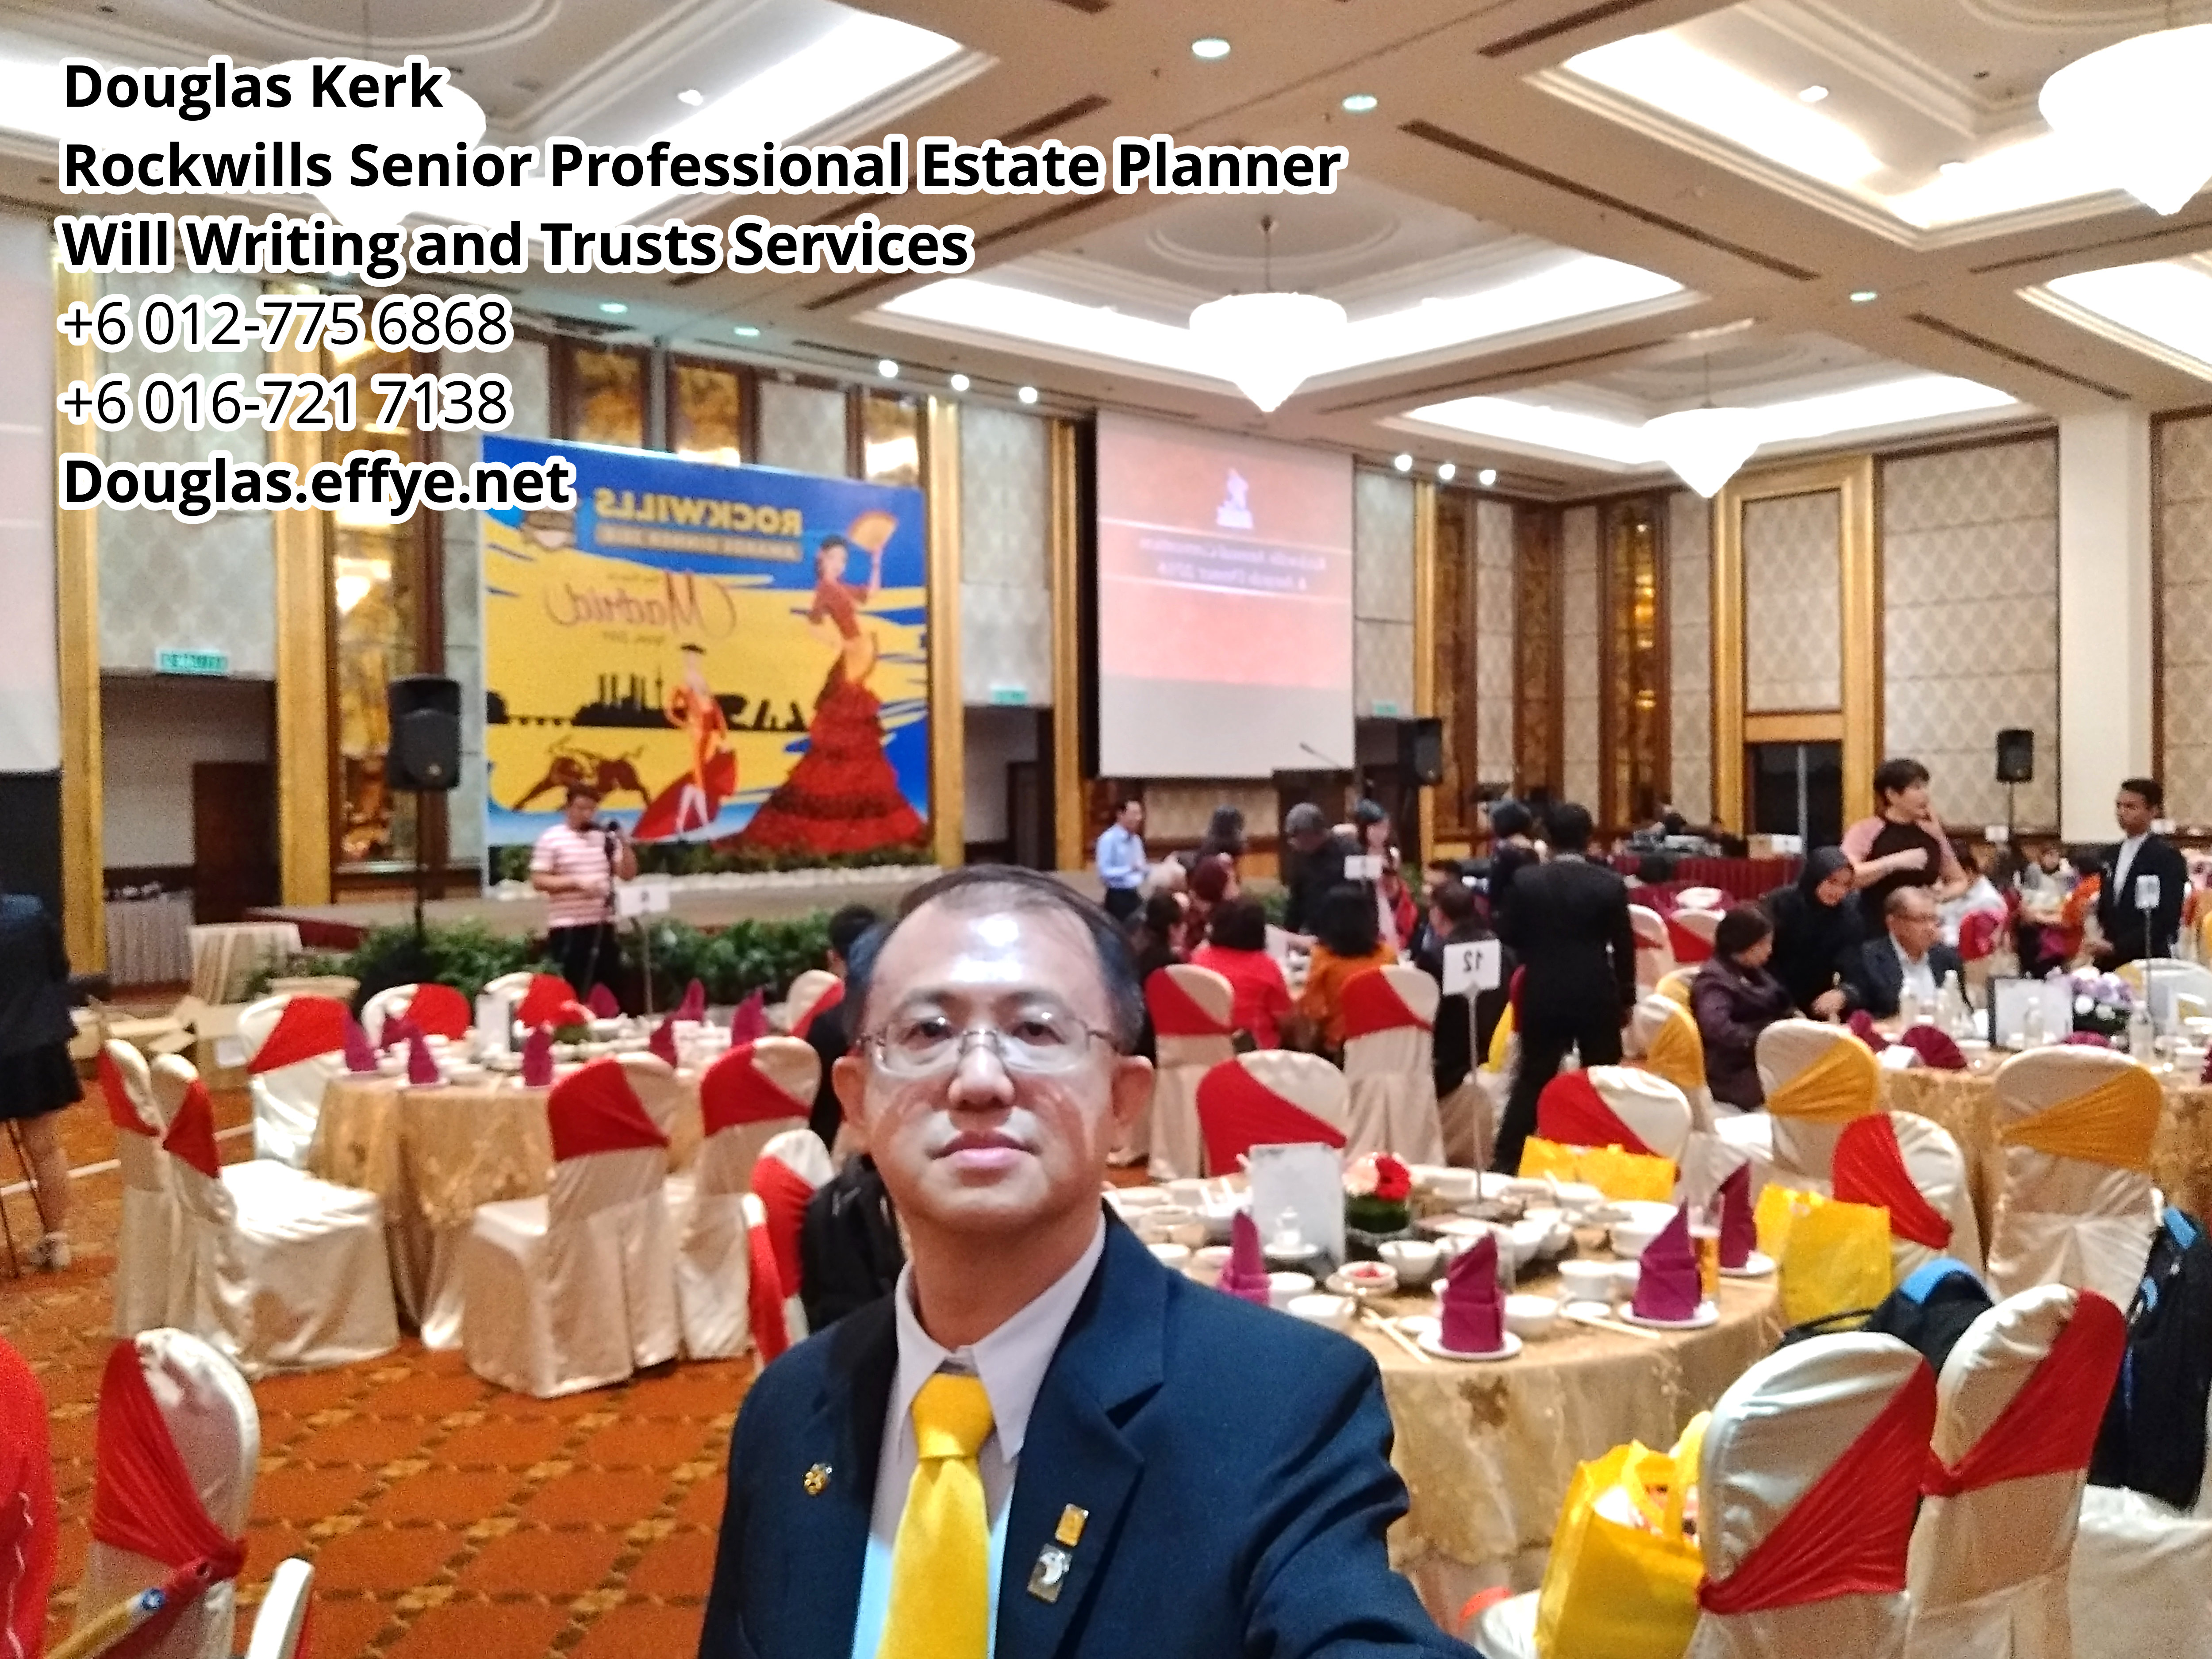 Douglas Kerk Rockwills Senior Professional Estate Planner - Will Writing and Trusts Services Batu Pahat and Kluang Johor Malaysia Property Management PA02-22